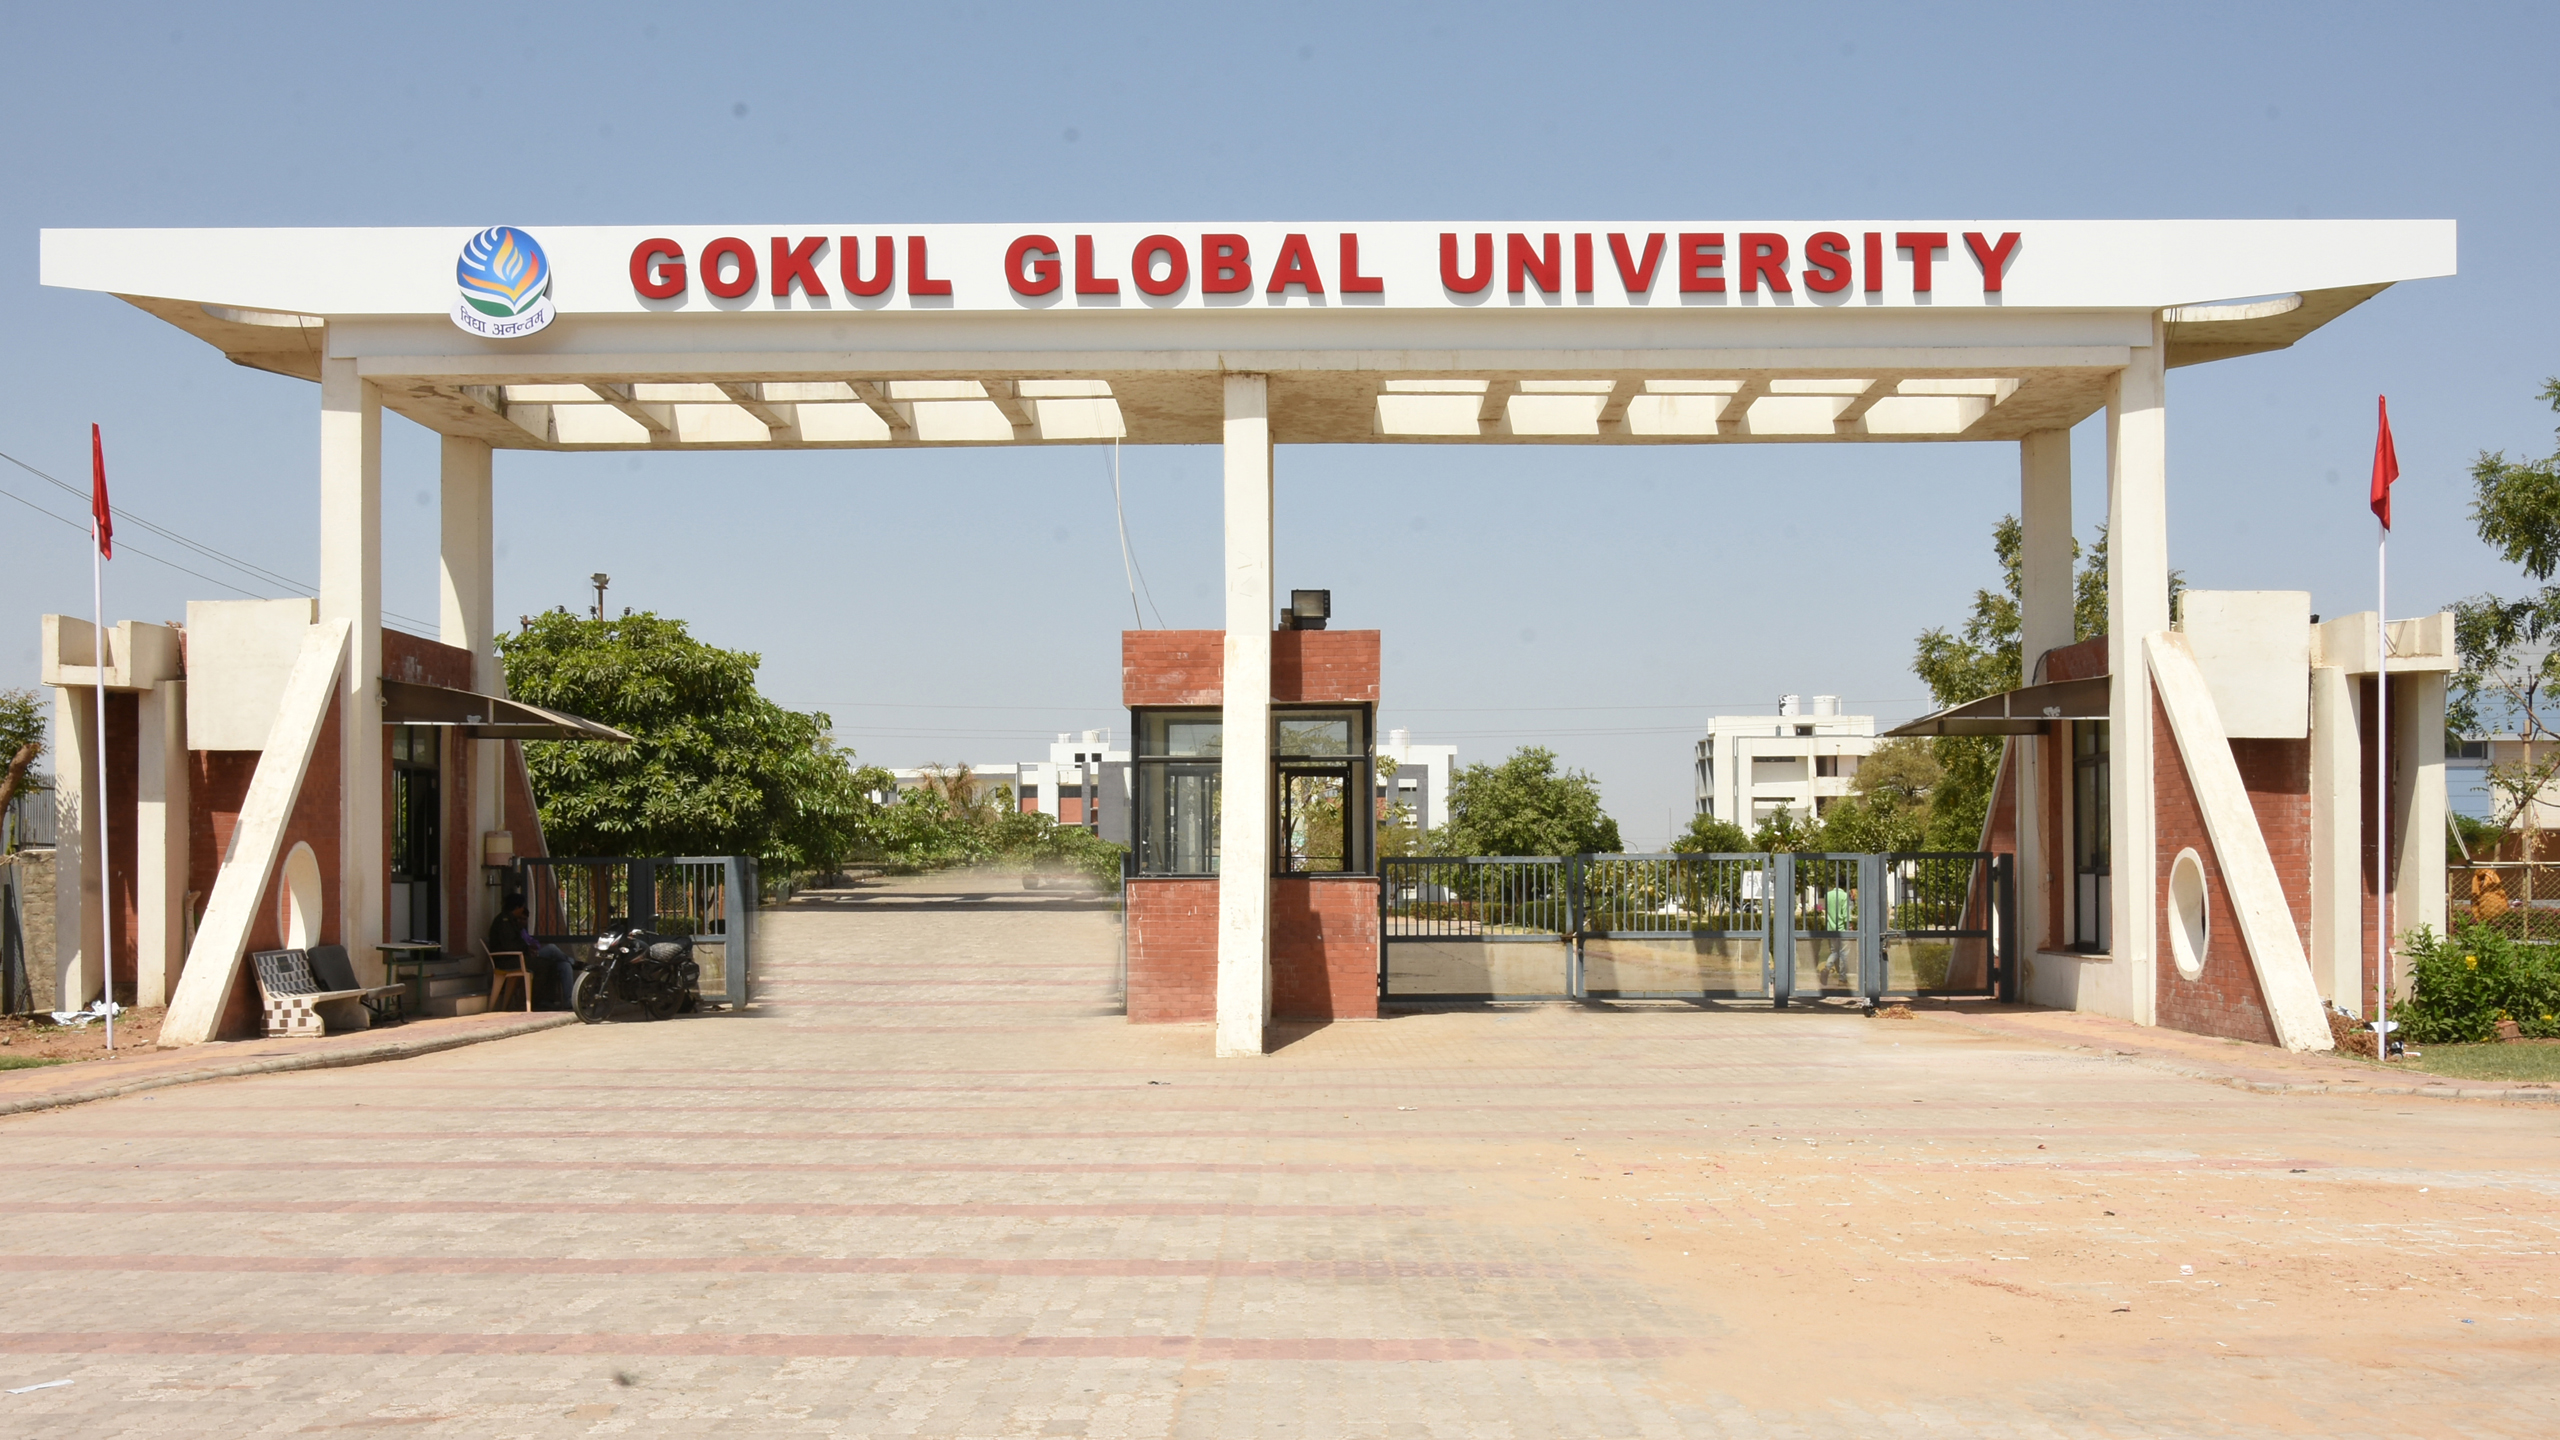 Gokul Global University (GGU)